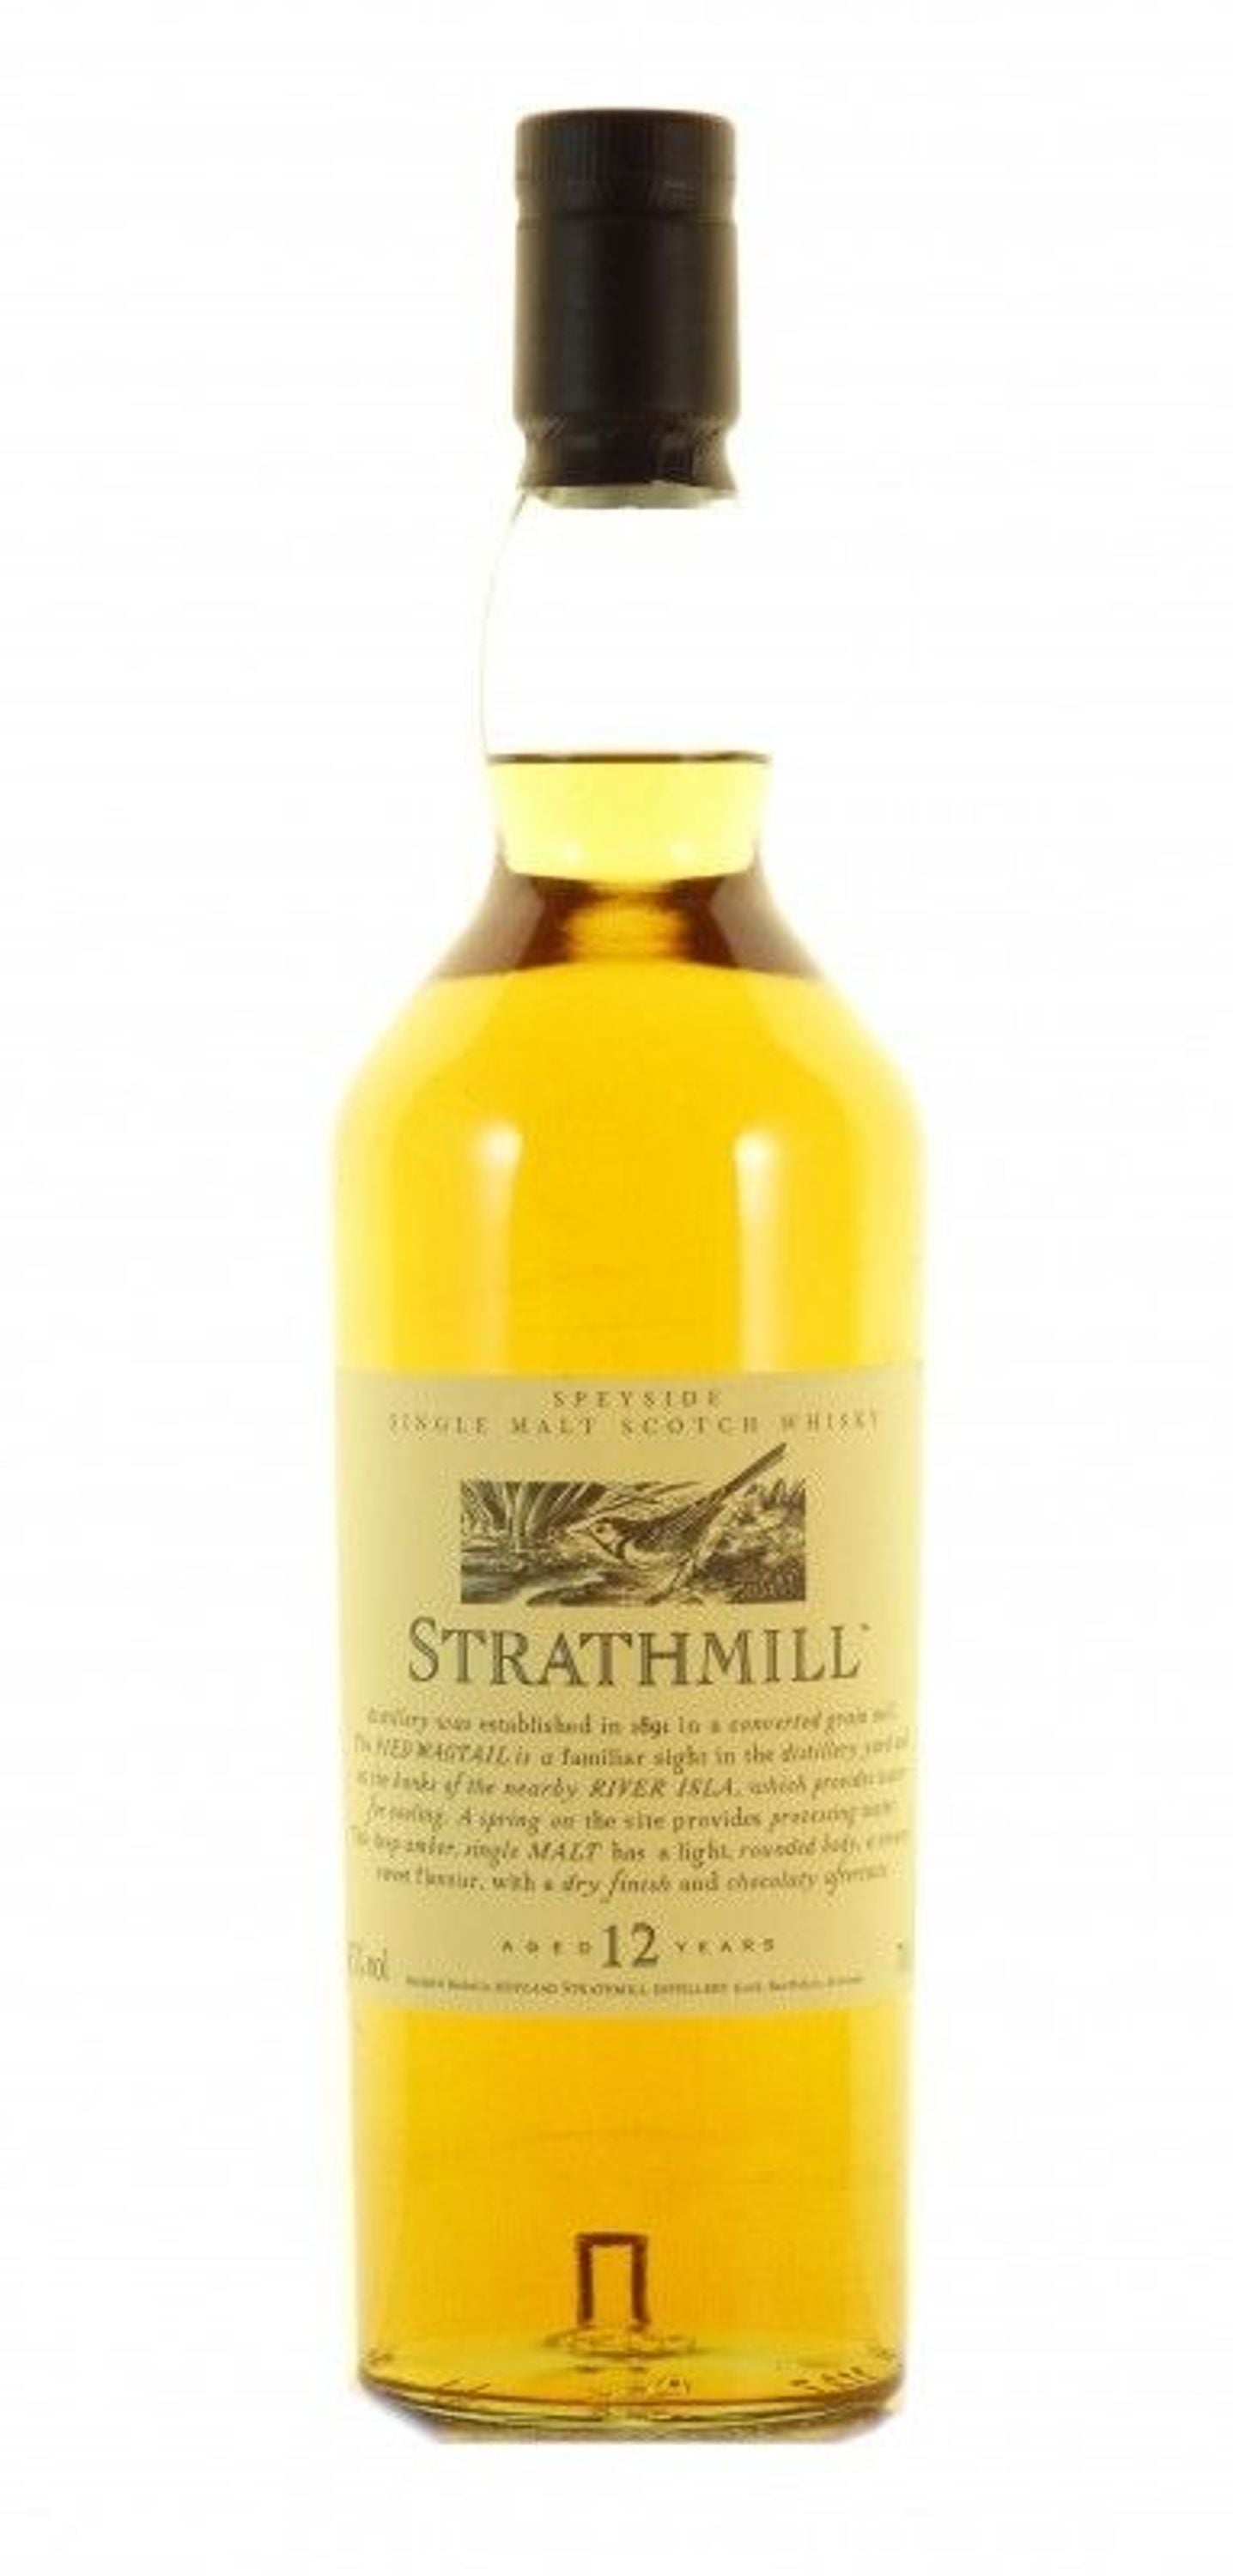 Strathmill 12 Years Flora &amp; Fauna Speyside Single Malt Scotch Whisky 0,7l, 43% Vol.